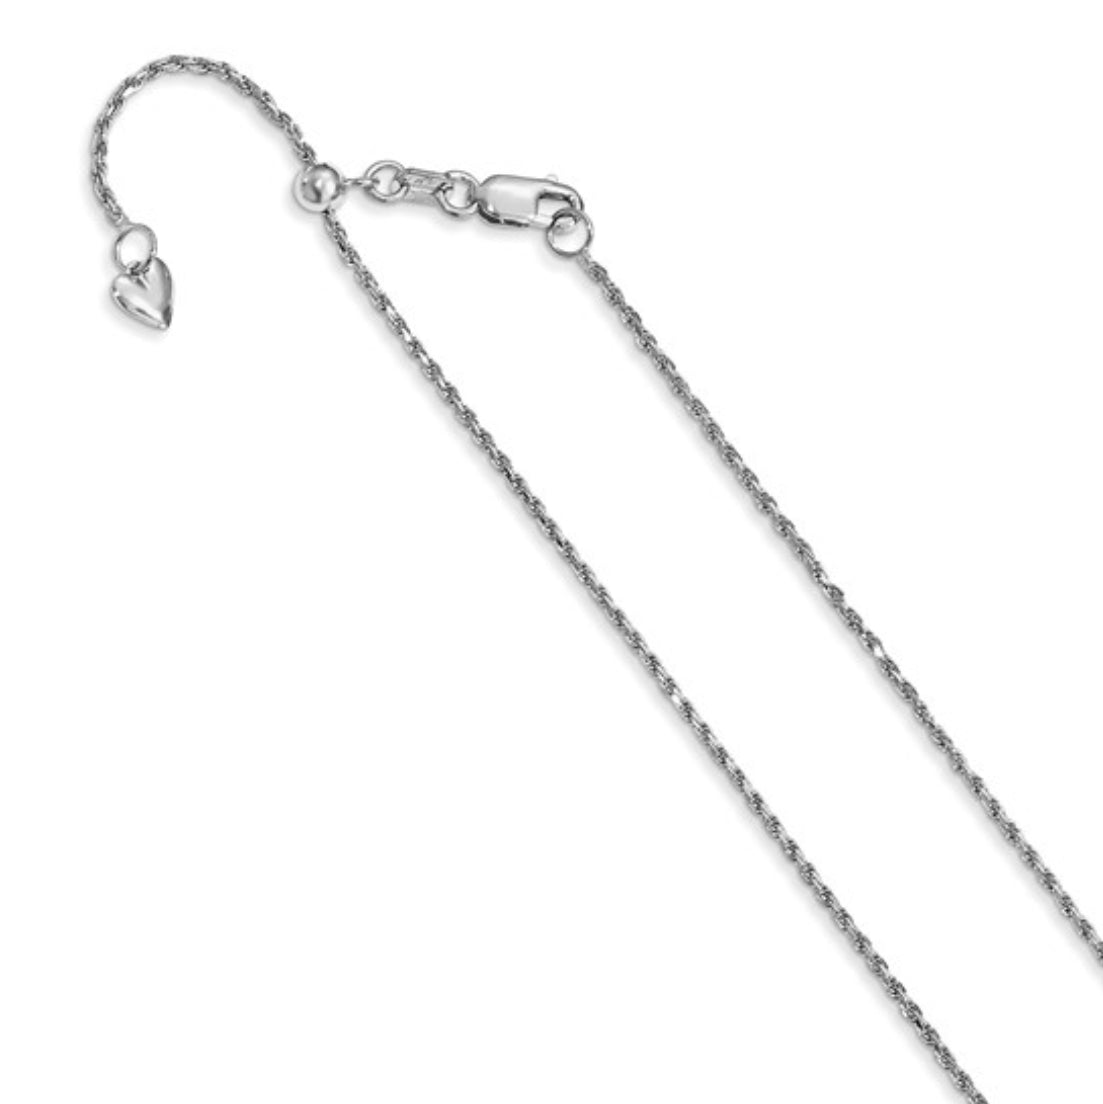 Adjustable 14K Gold Diamond Cut Rope Chain 16&quot; - 22&quot; - 1.2mm